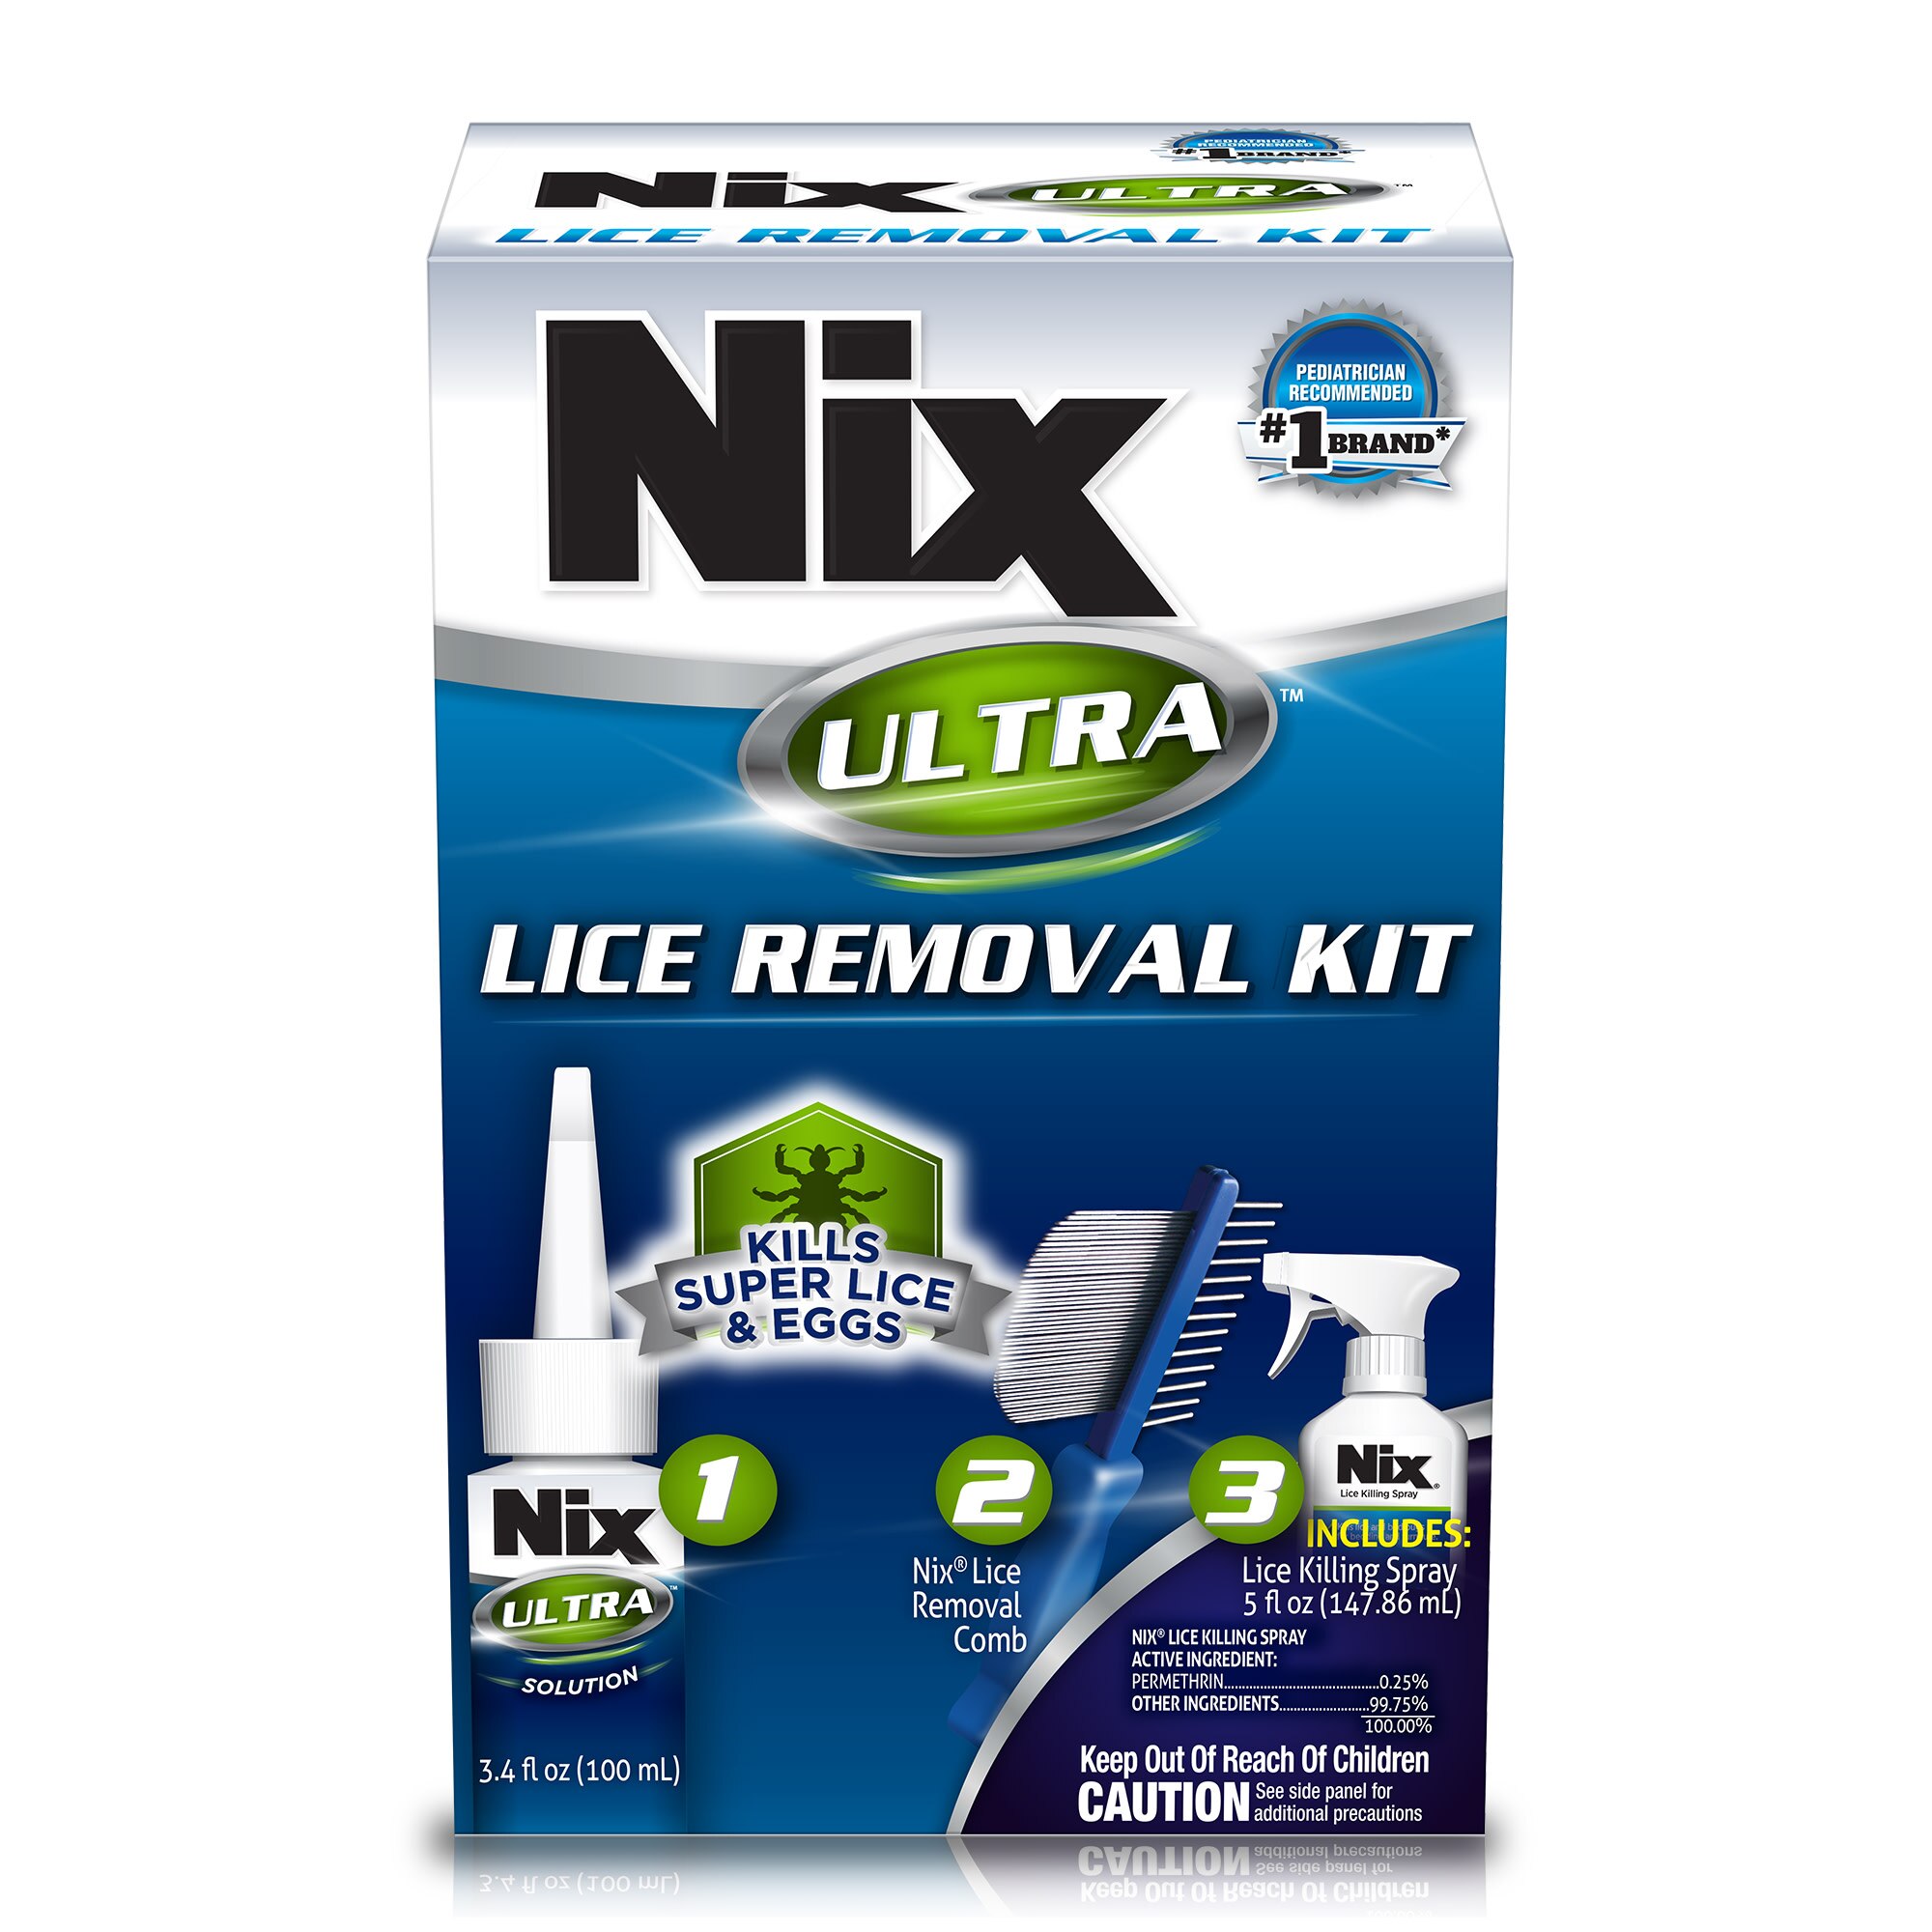 NIX Ultra - Kit para eliminar los piojos